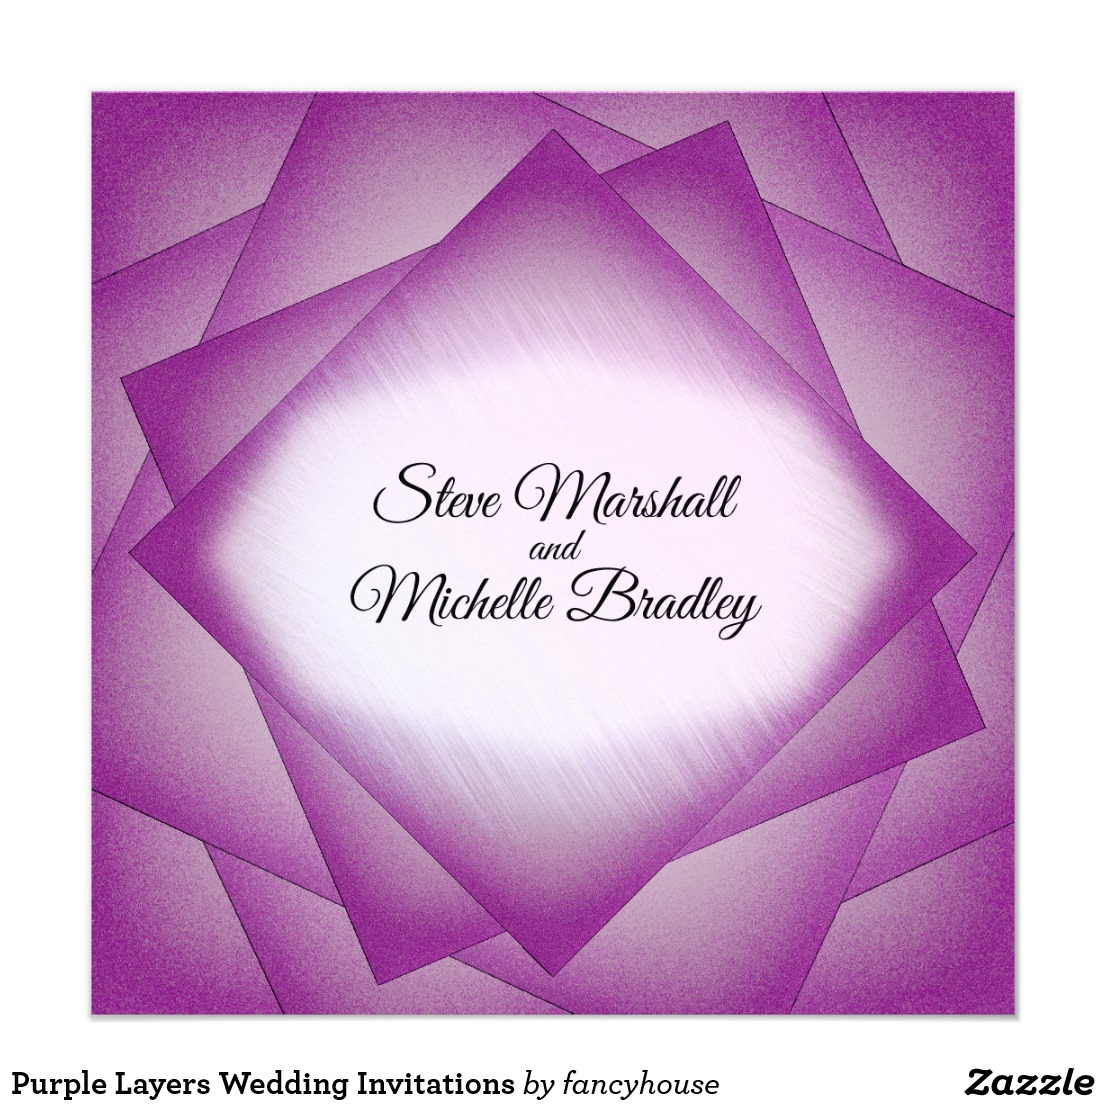 Purple Layers Wedding Invitations